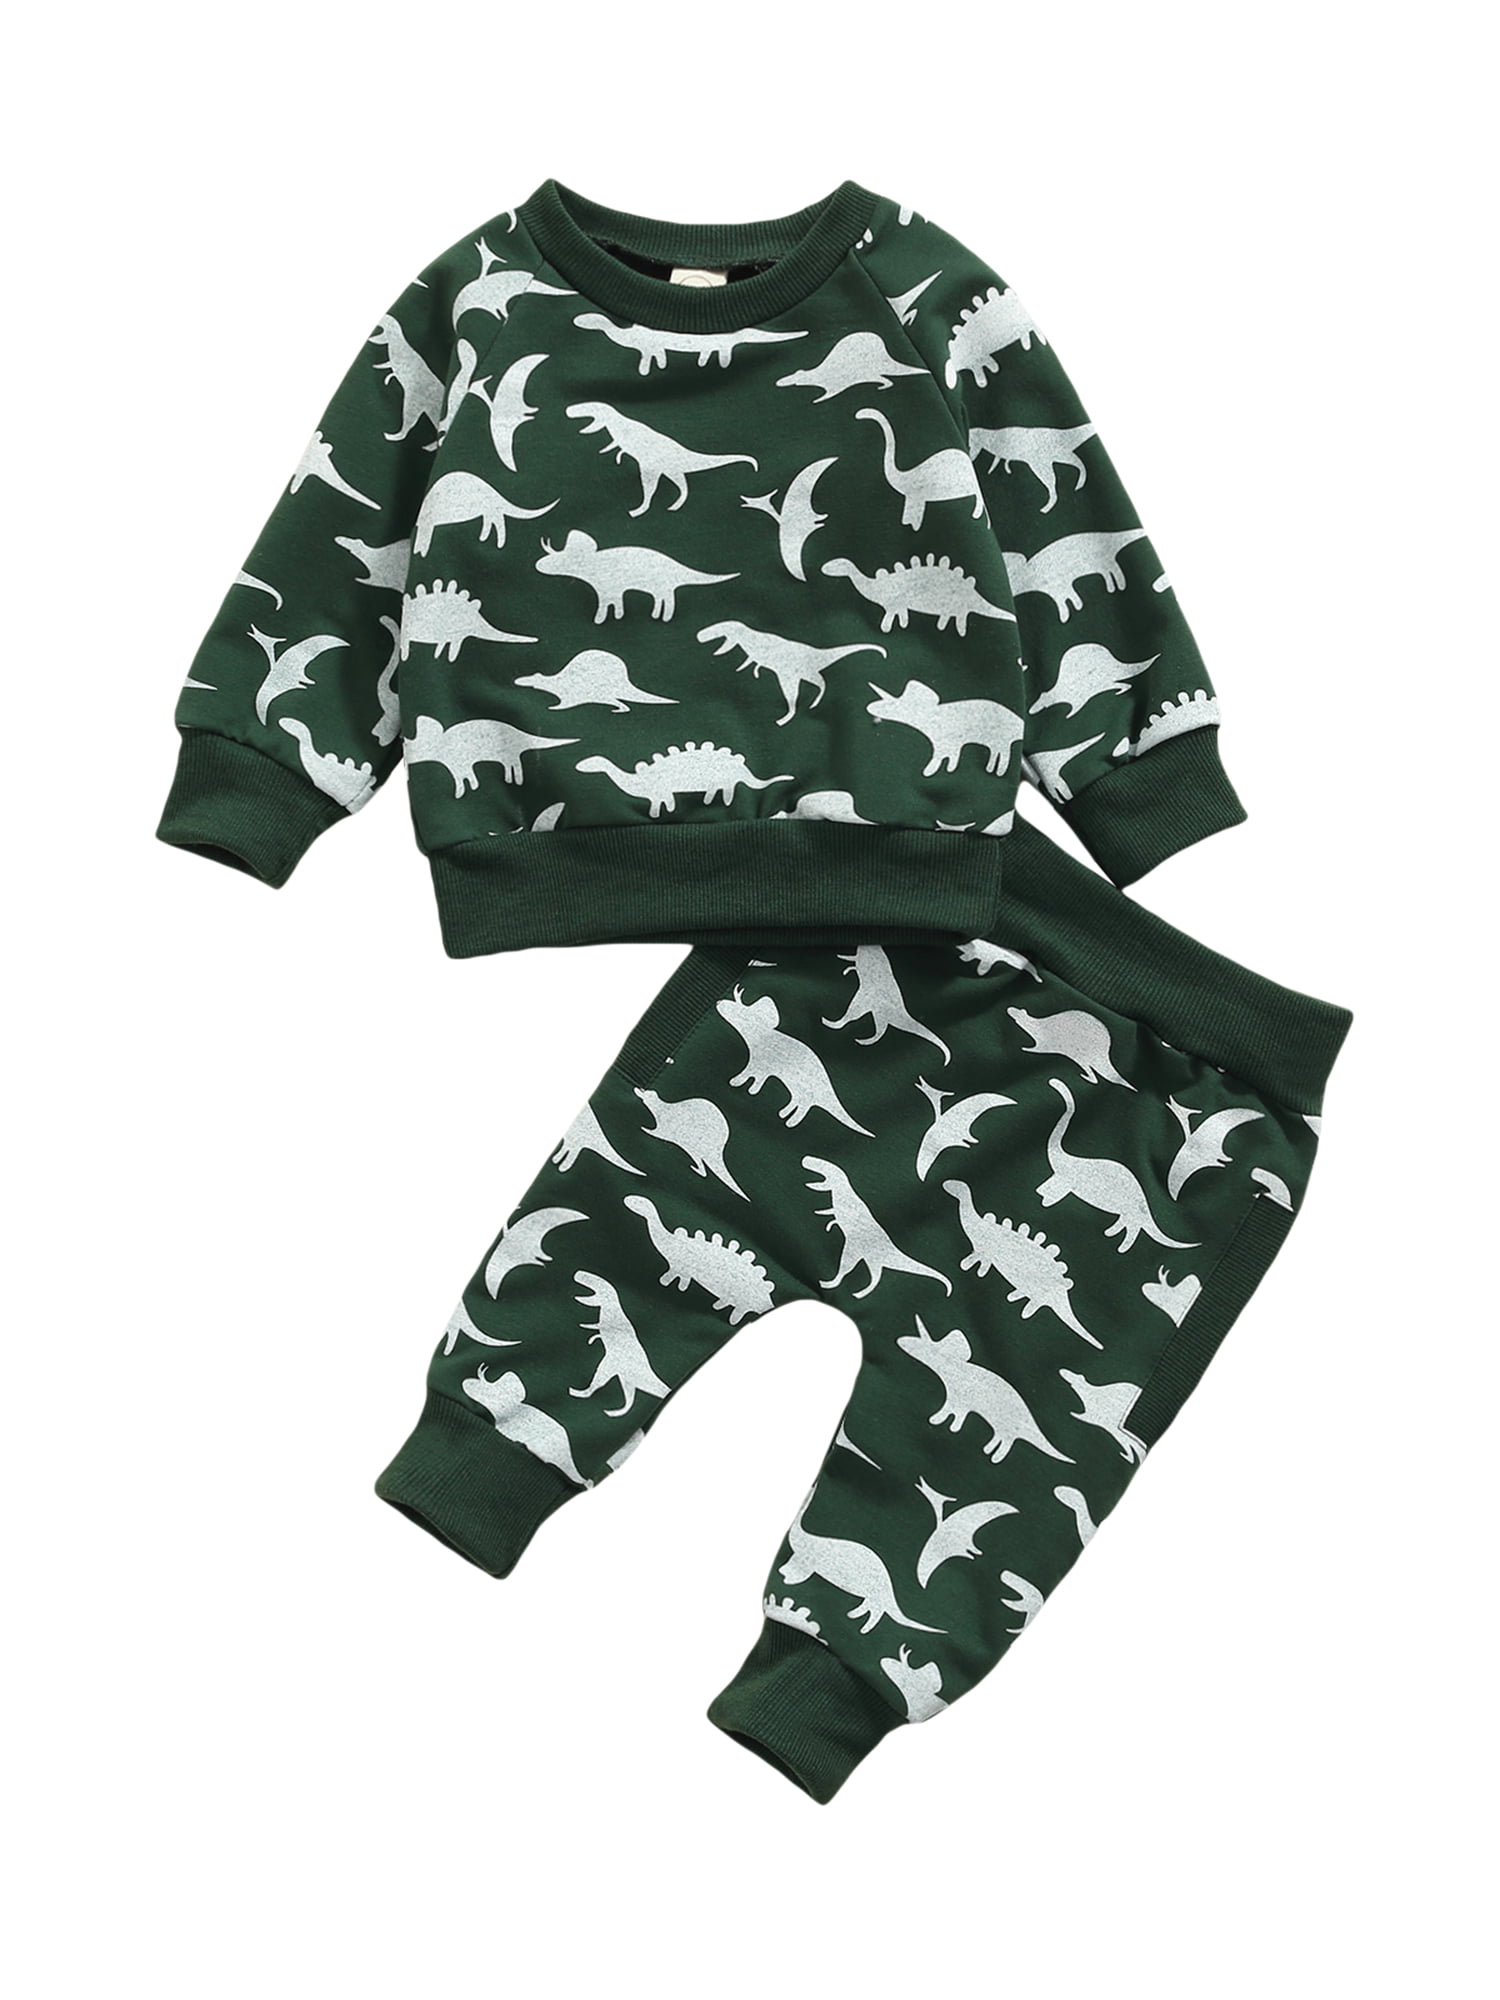 Baby Kid Boy Girl Dinosaur Print Pajamas Set Outfit Casual Tops Pants Clothes 